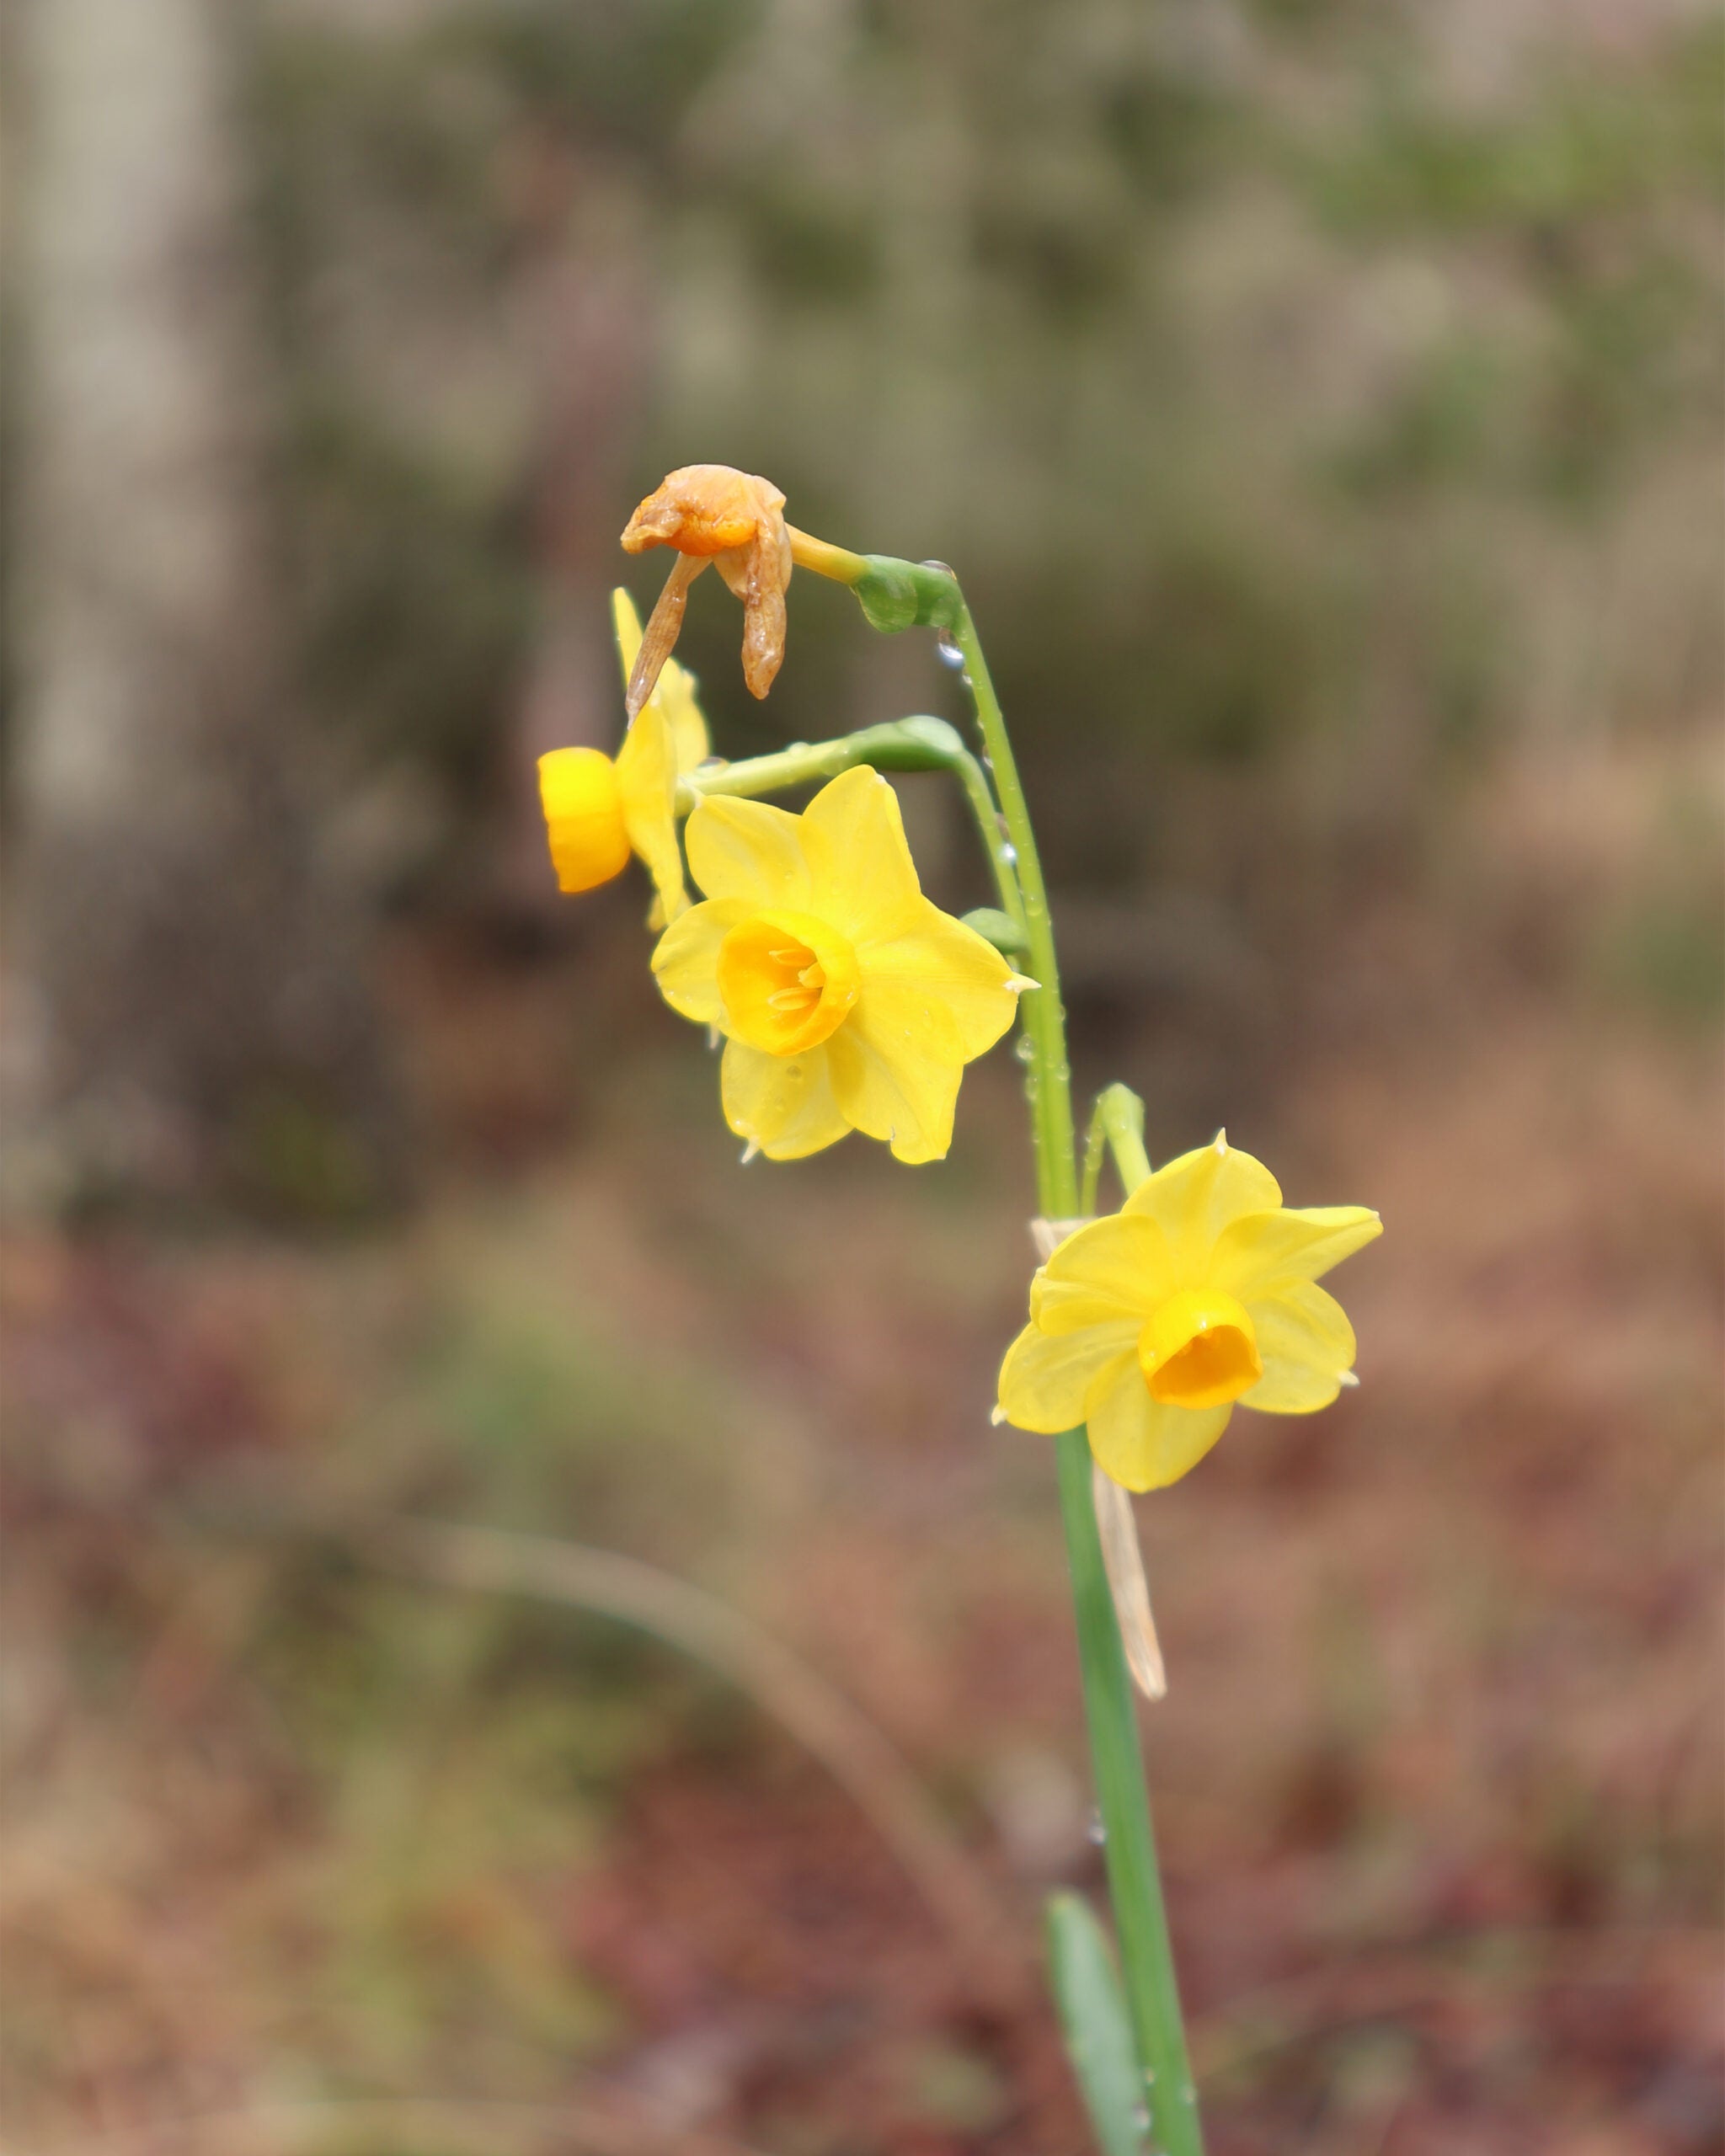 Tiny yellow daffodils flowers